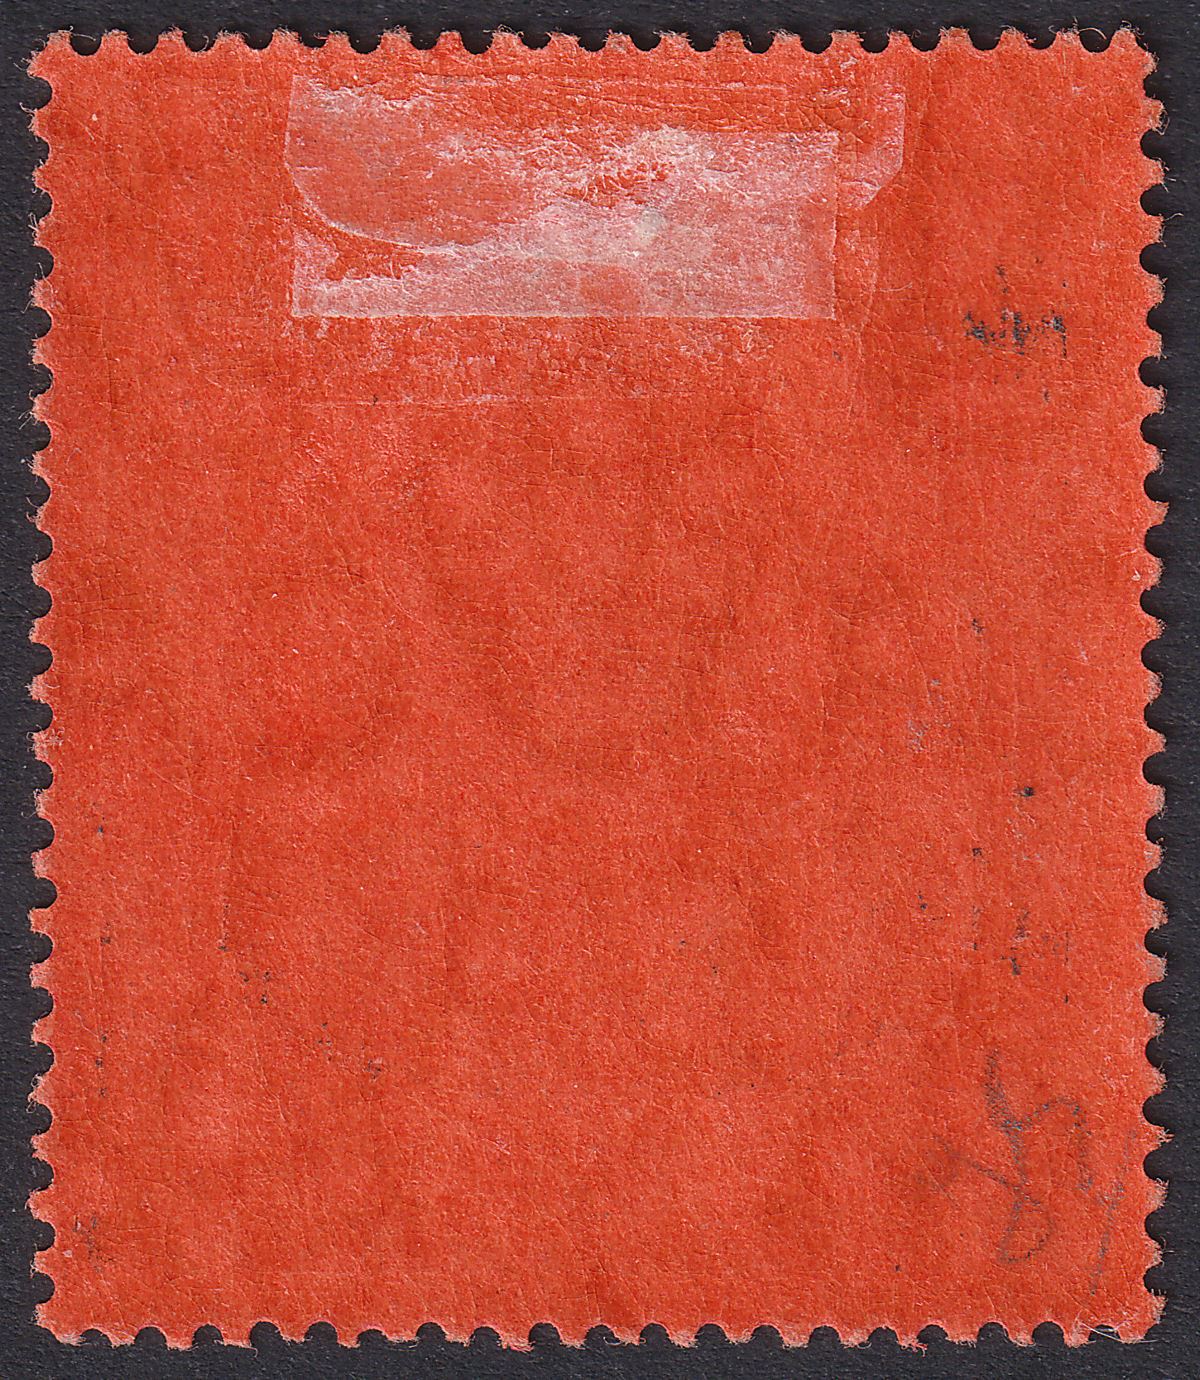 Leeward Islands 1938 KGVI £1 Purple and Black on Brick-Red p14 Mint SG114